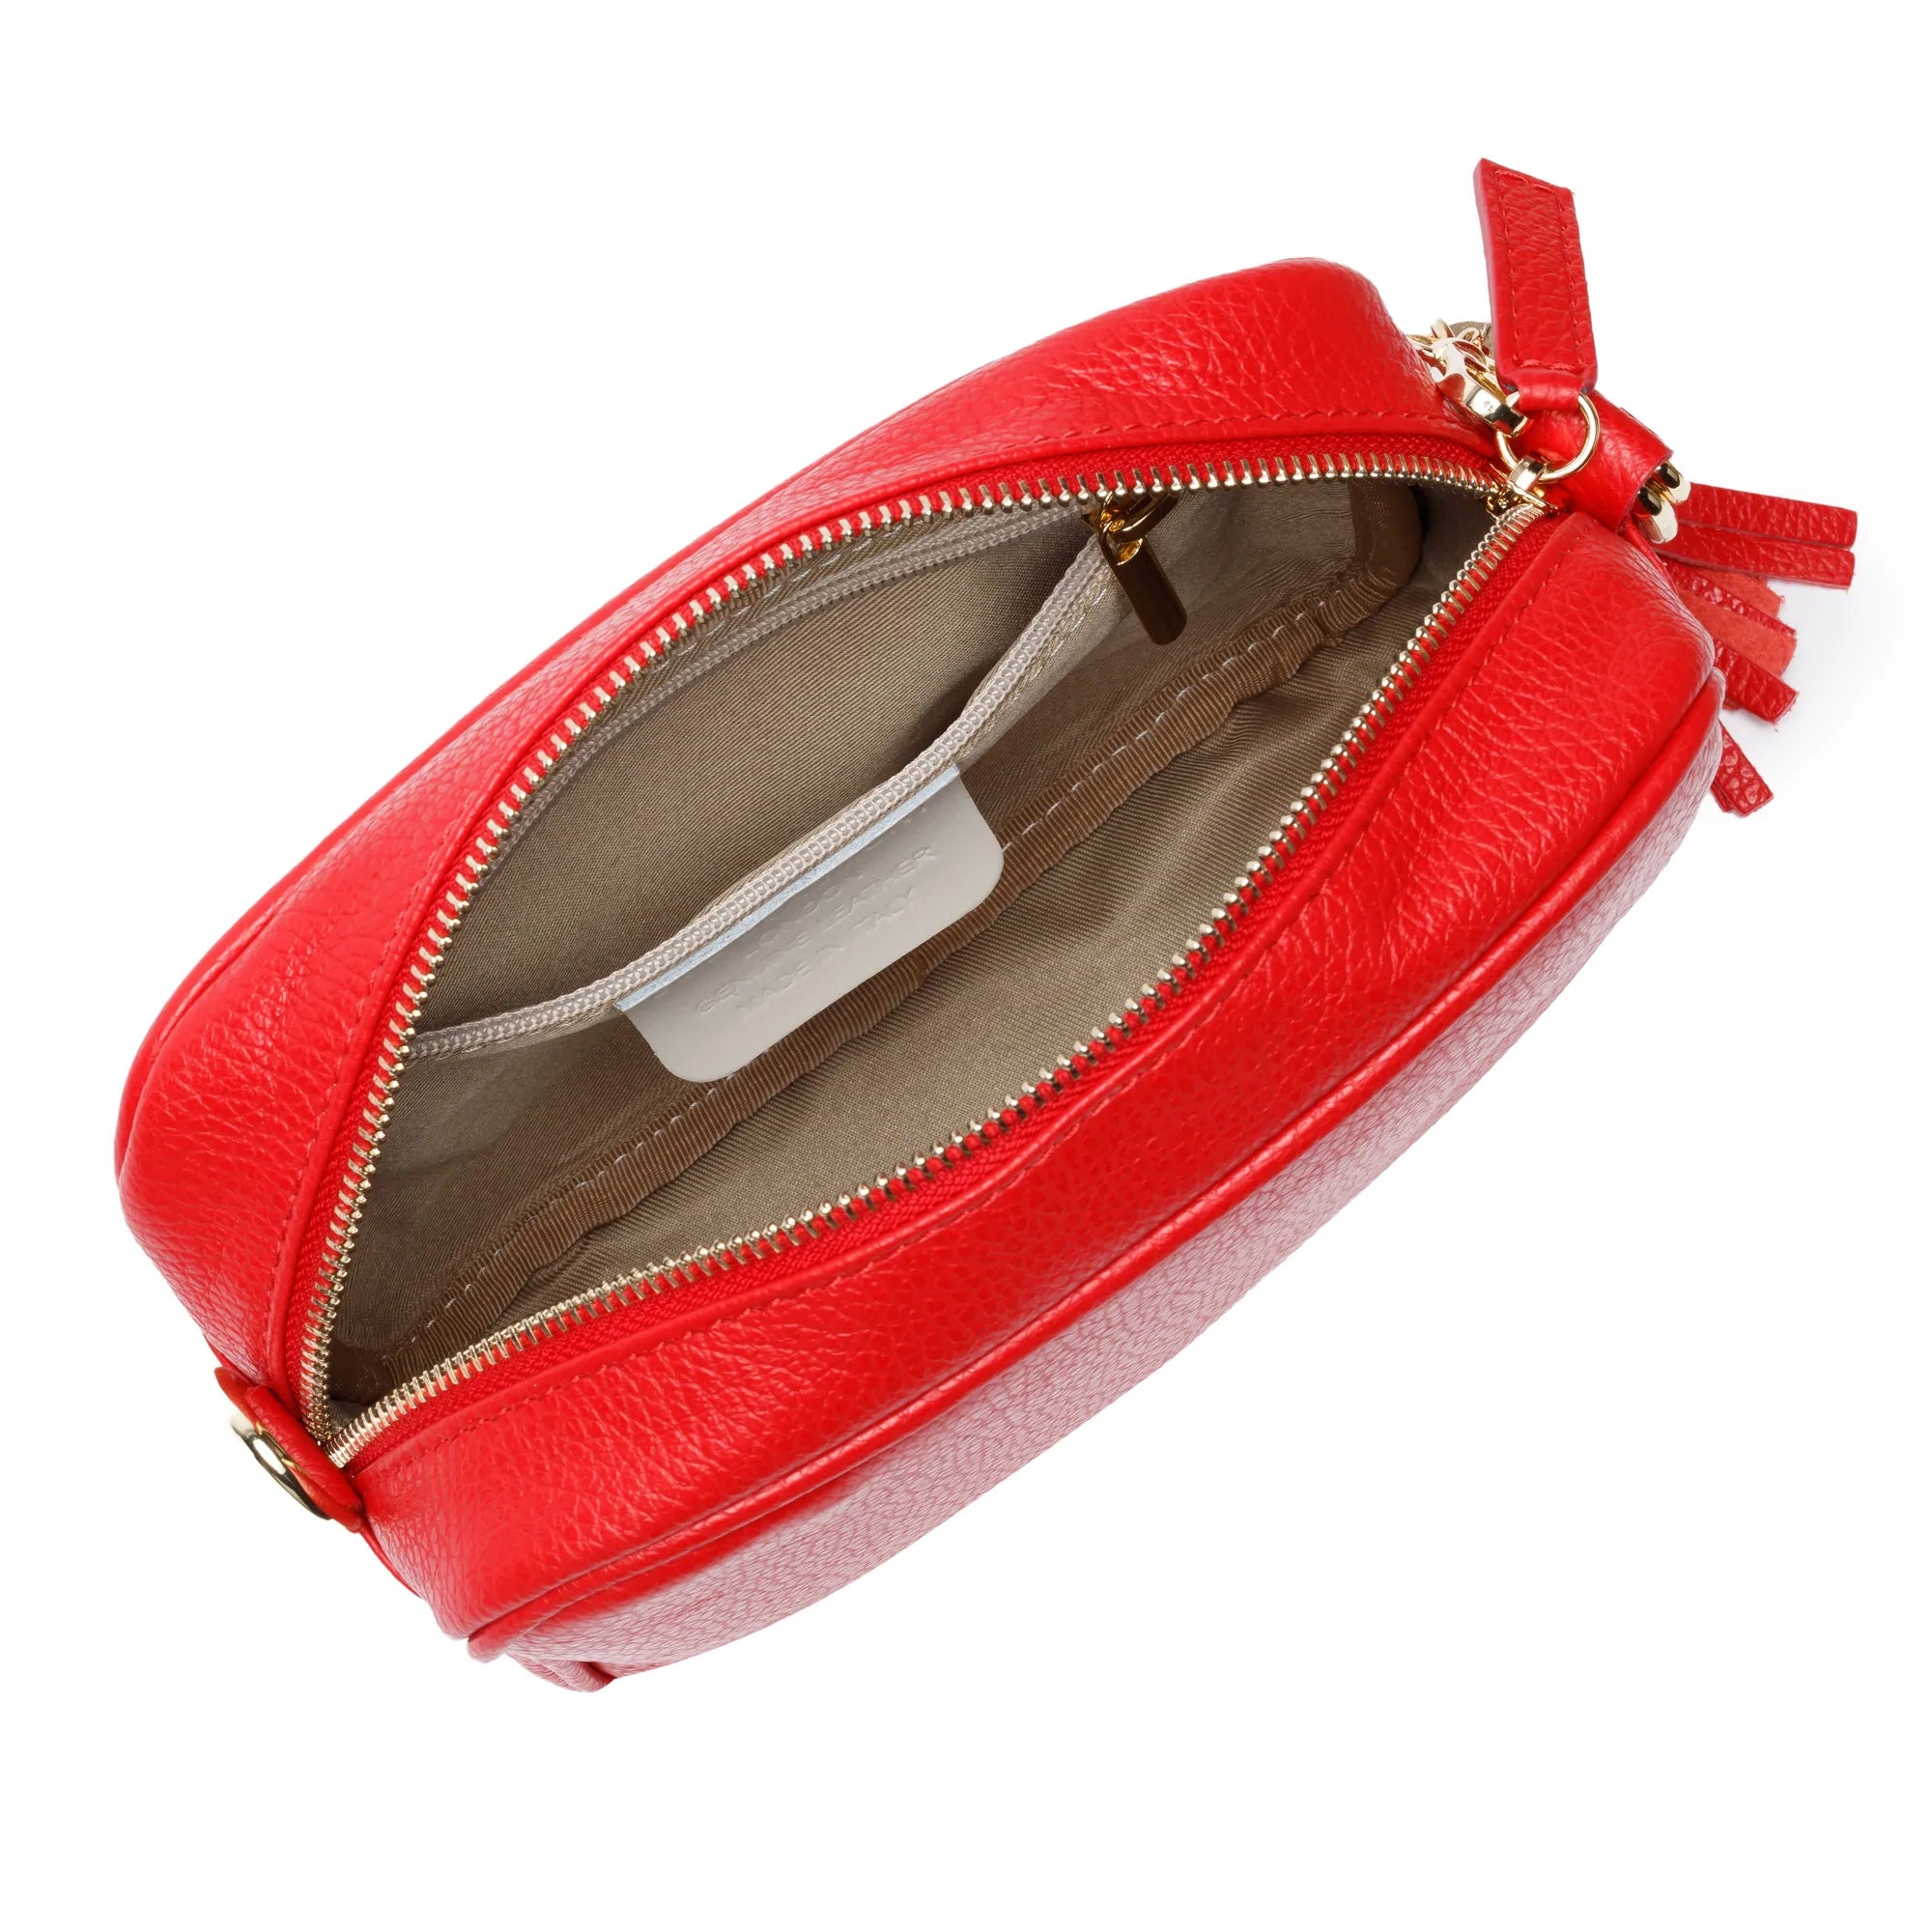 Mill & Hide - Elie Beaumont - Crossbody Handbag - Red with Baroque Strap